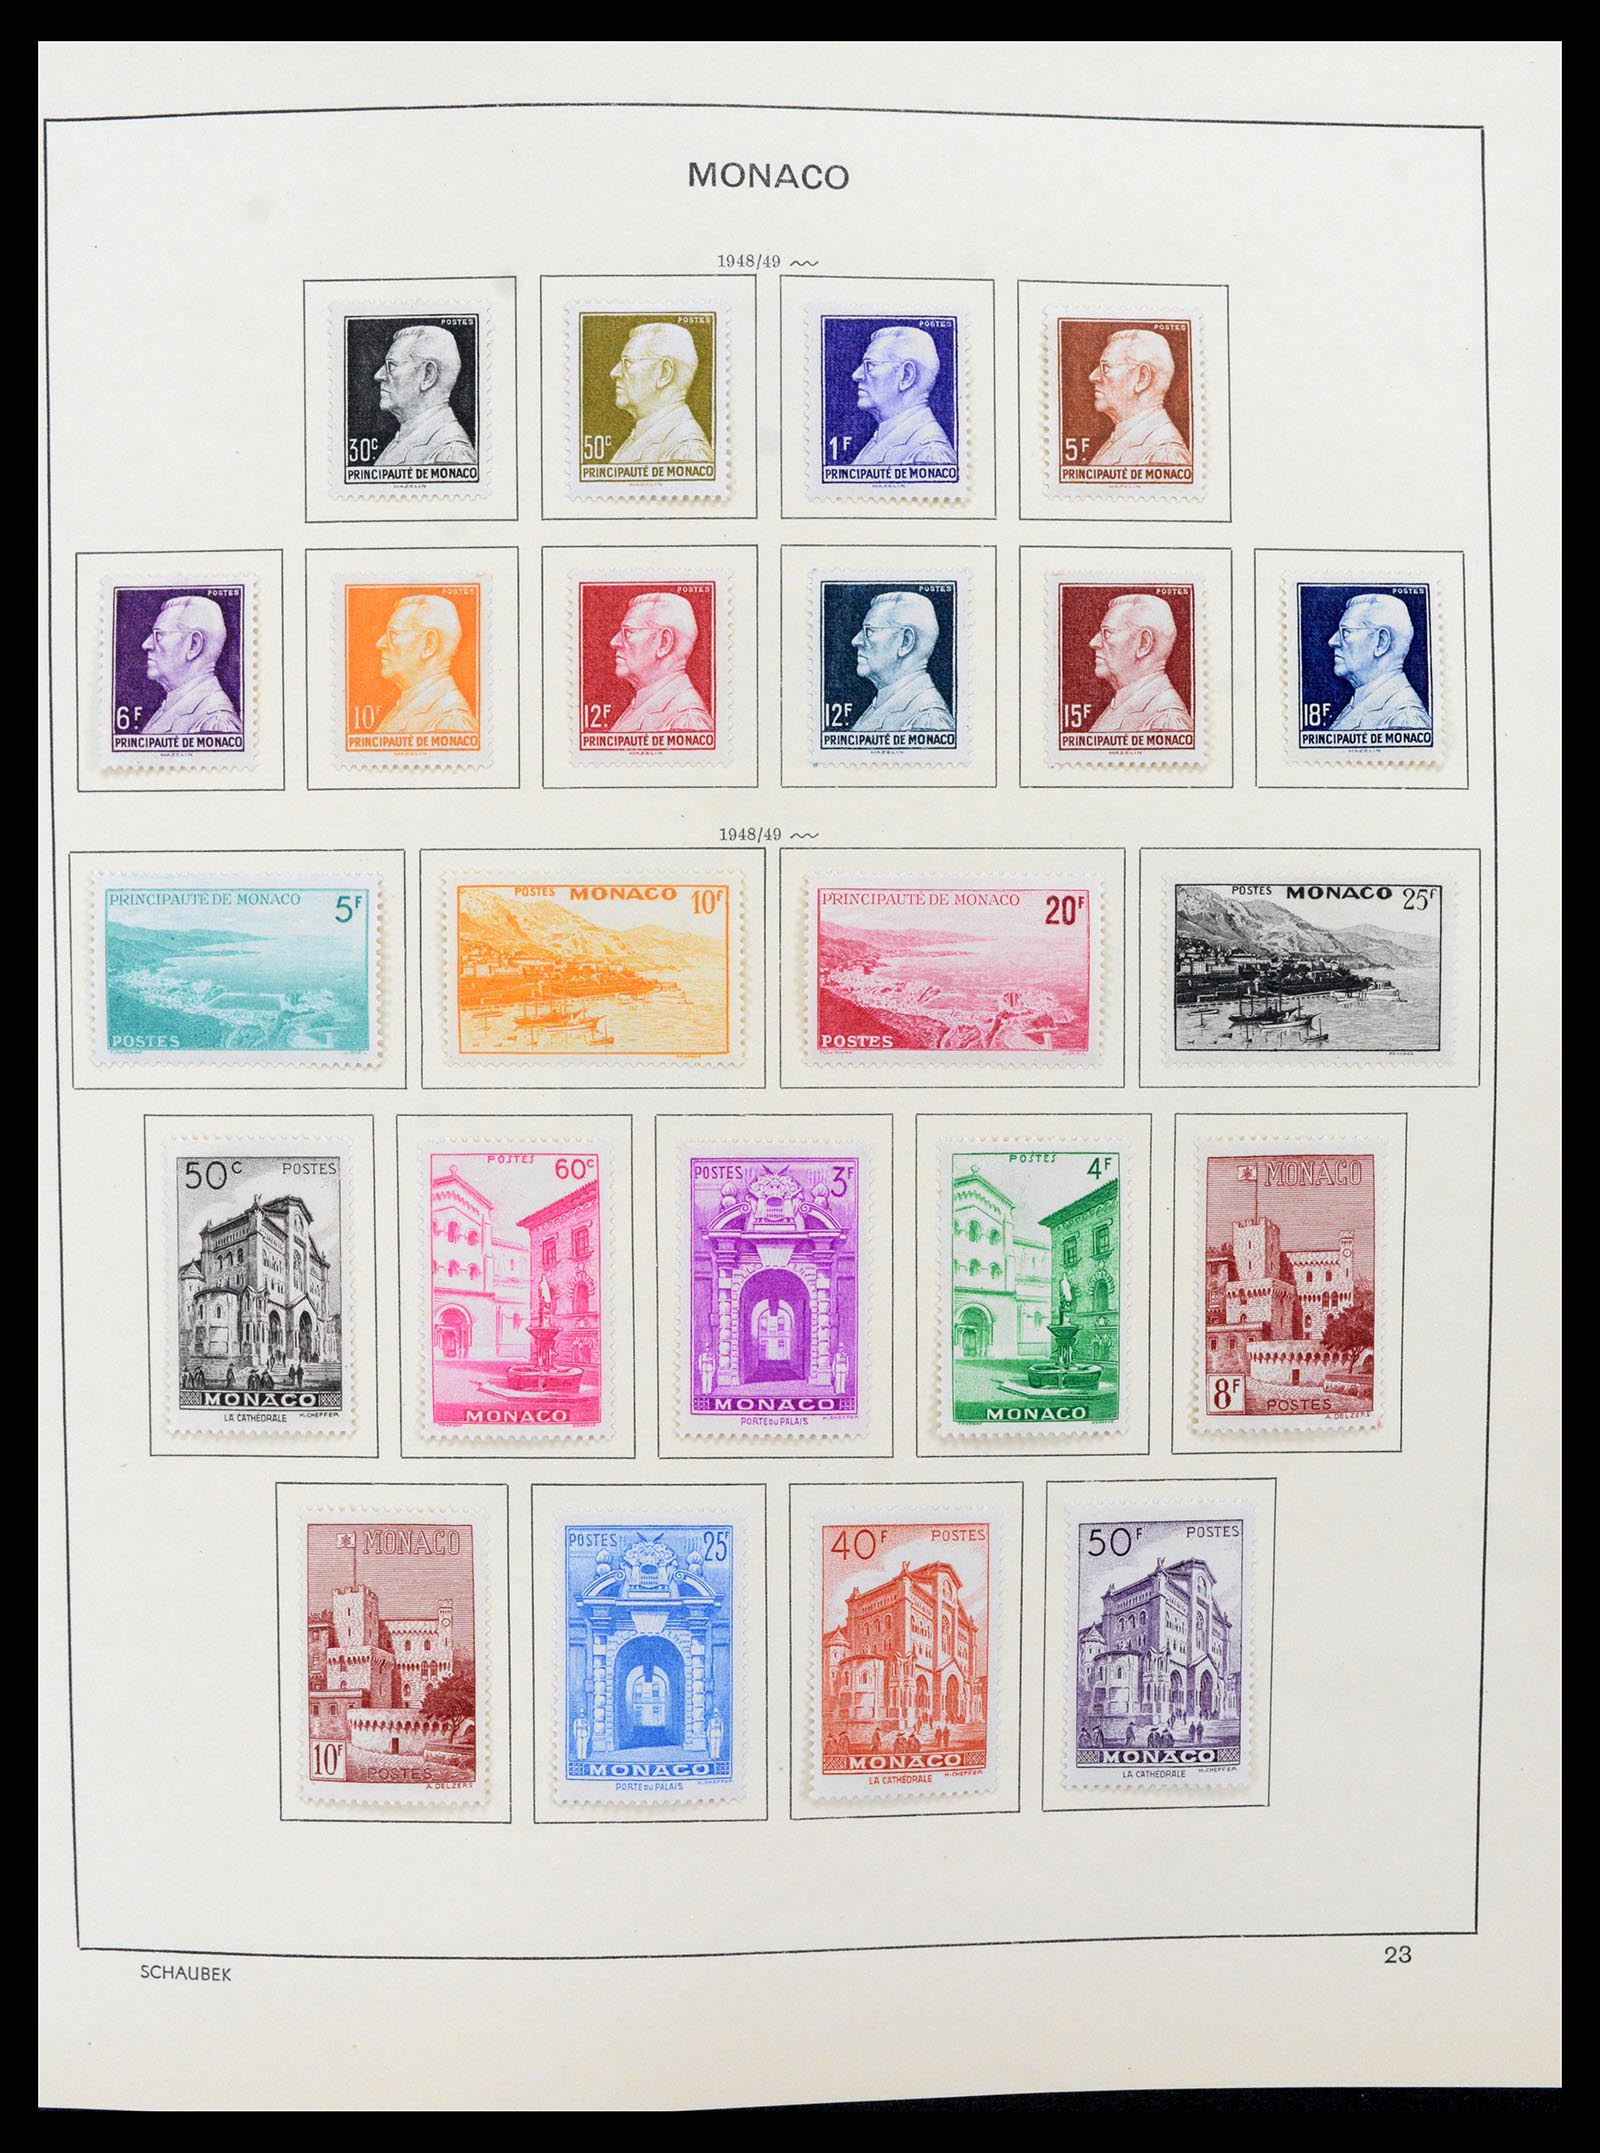 37570 024 - Stamp collection 37570 Monaco 1885-2013.